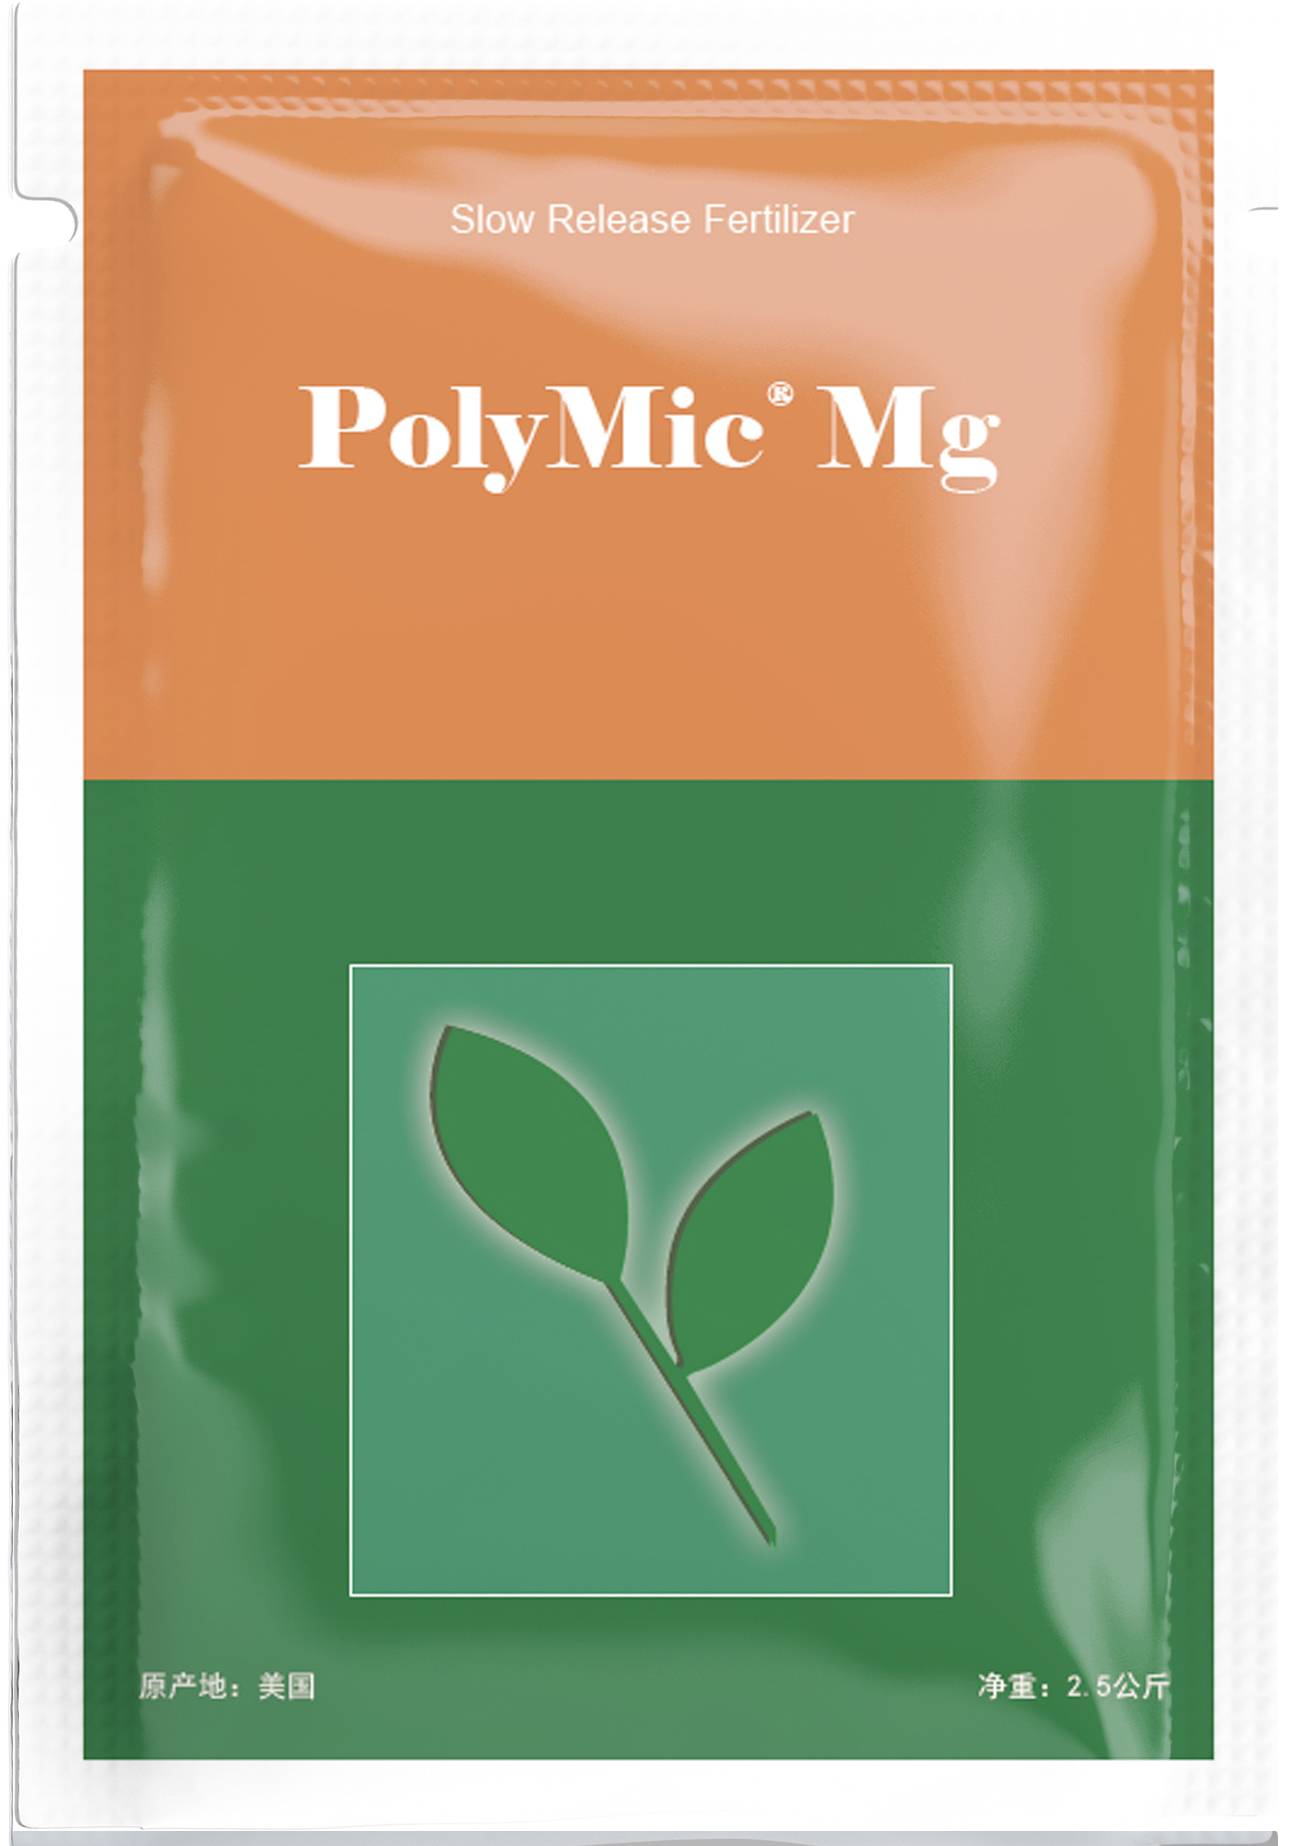 PolyMic Mg 长效缓释镁肥